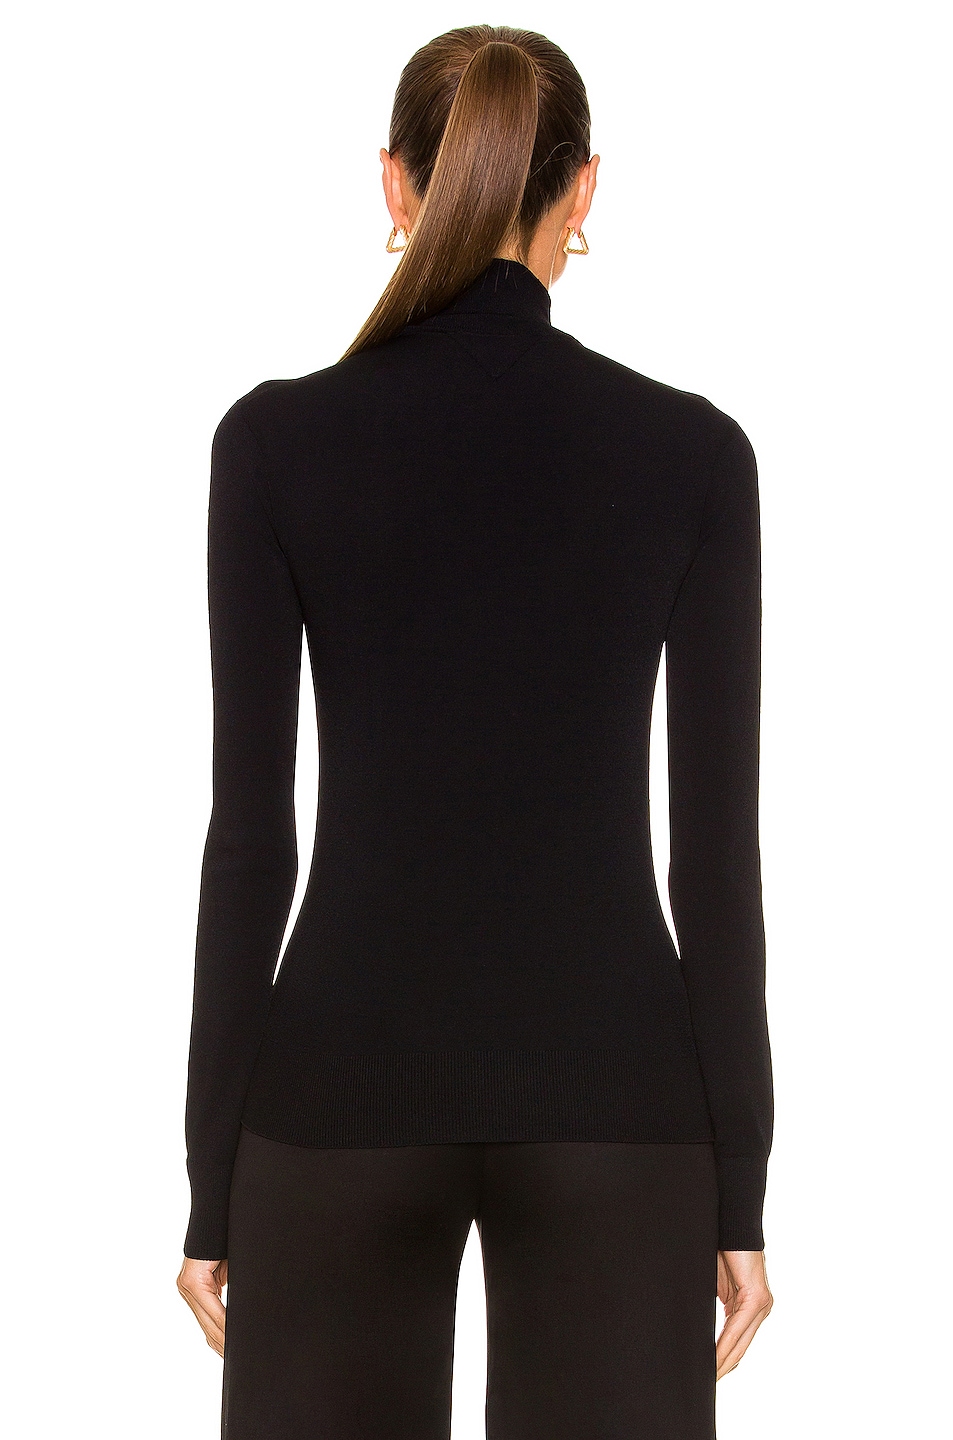 Bottega Veneta Technoskin Turtleneck Sweater in Black | FWRD